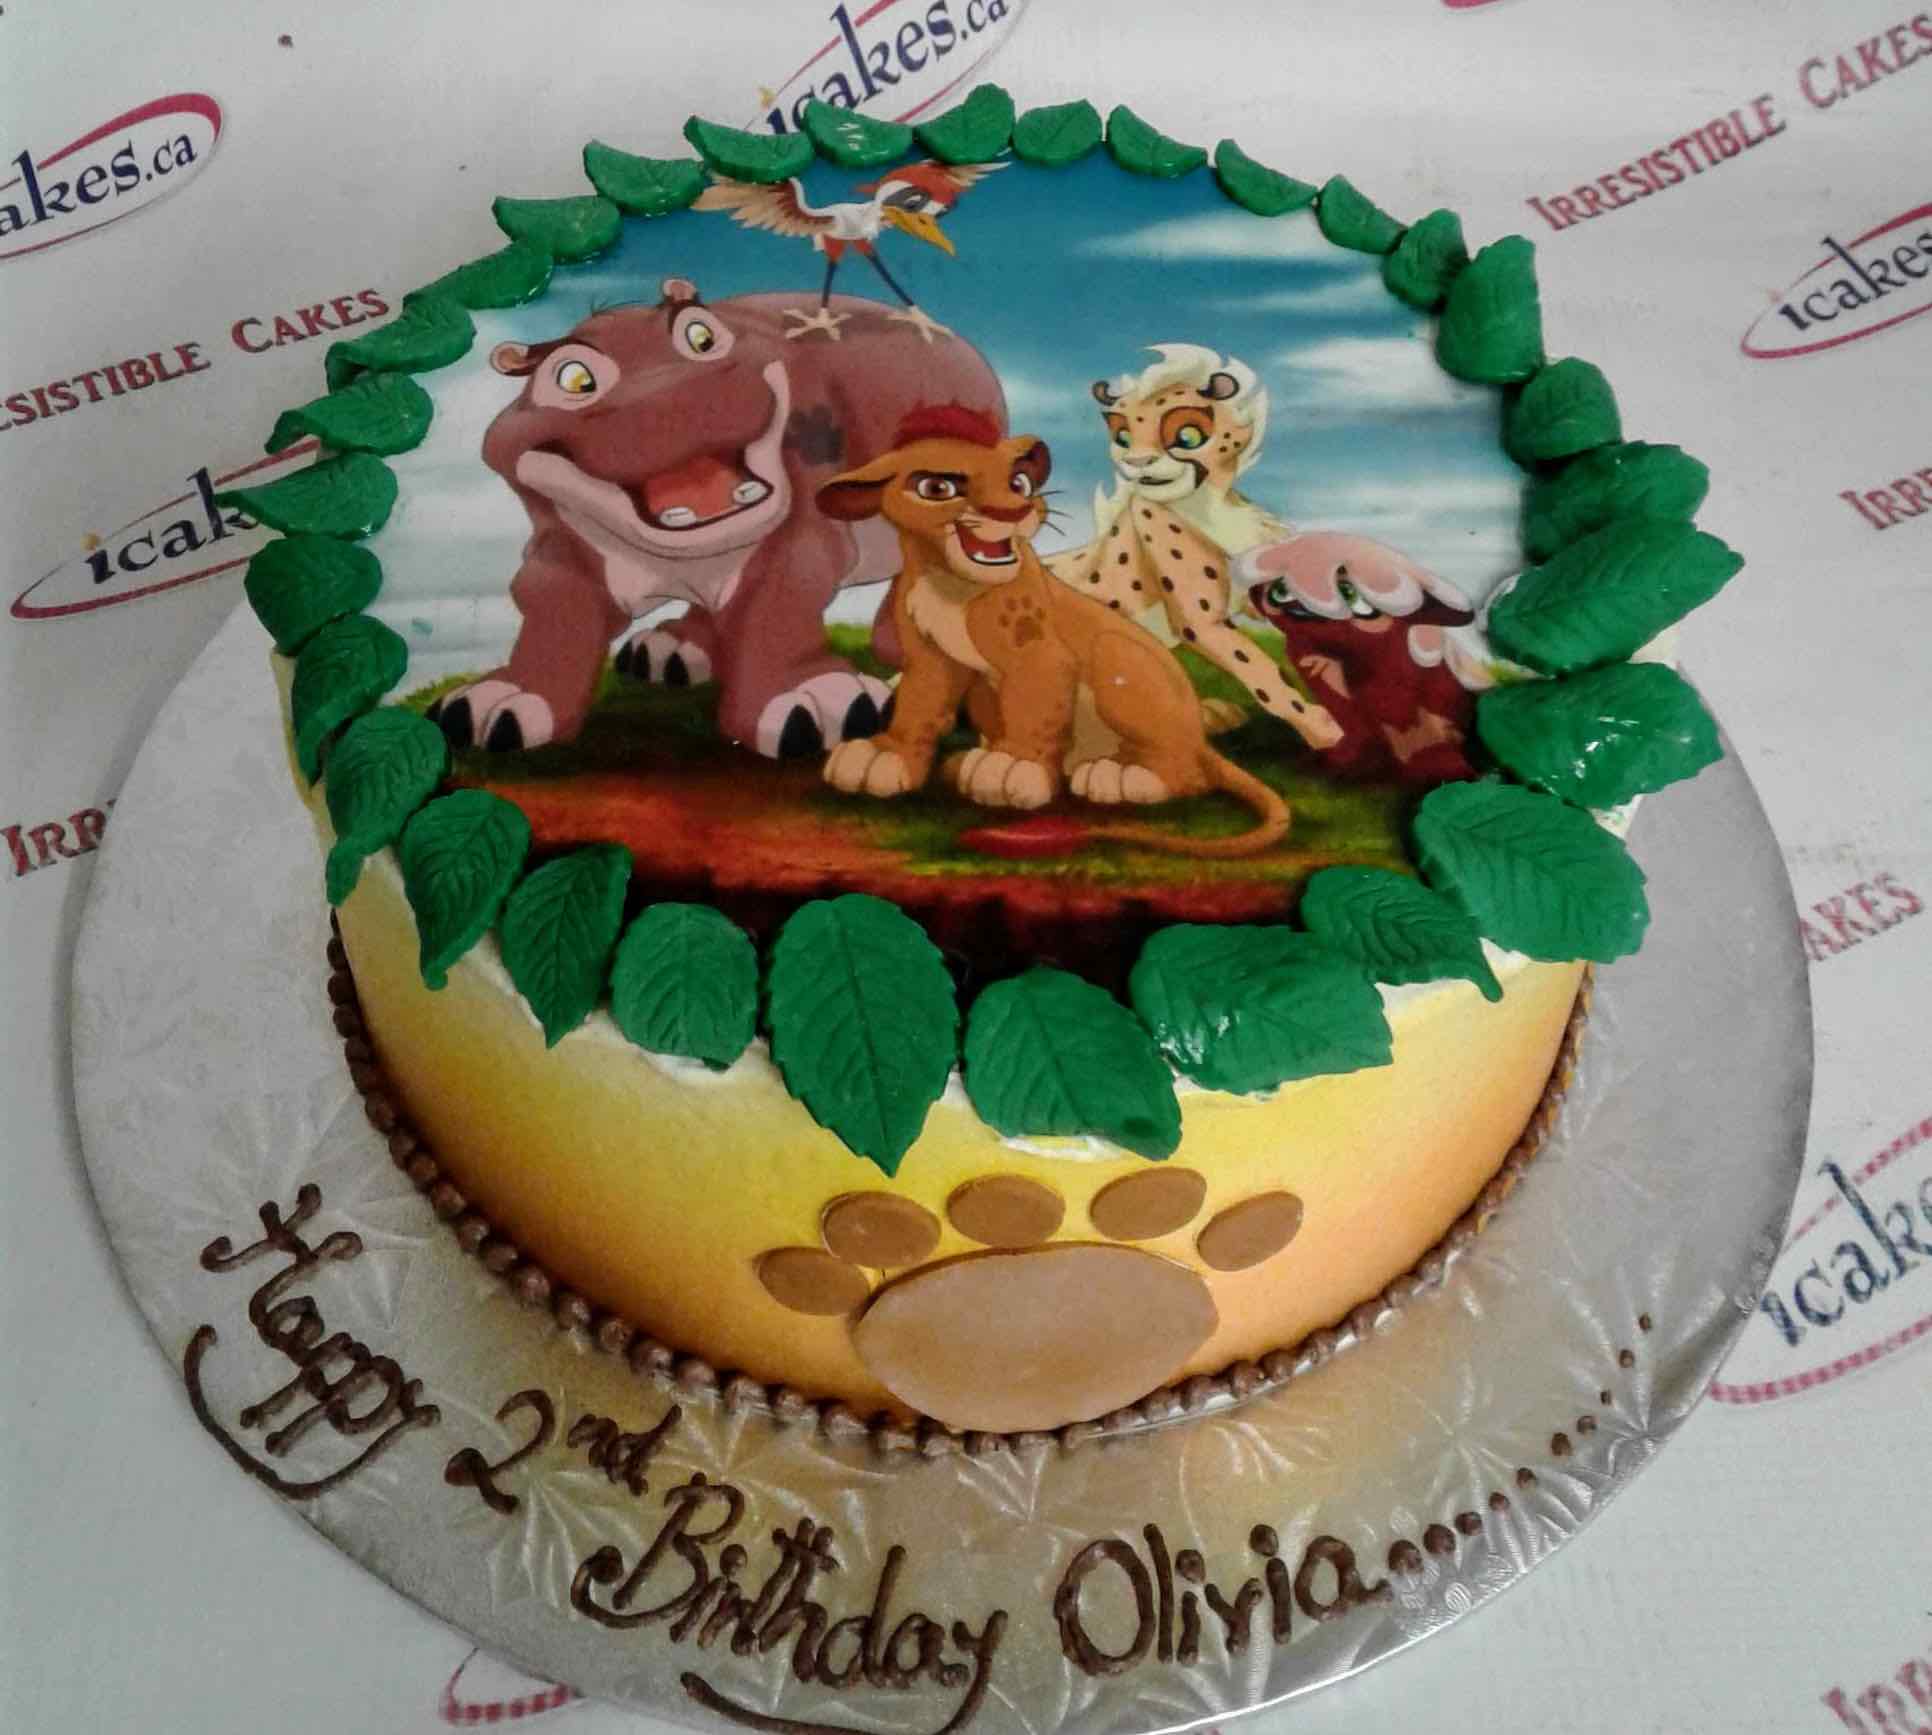 Mr. Crown Theme Cake